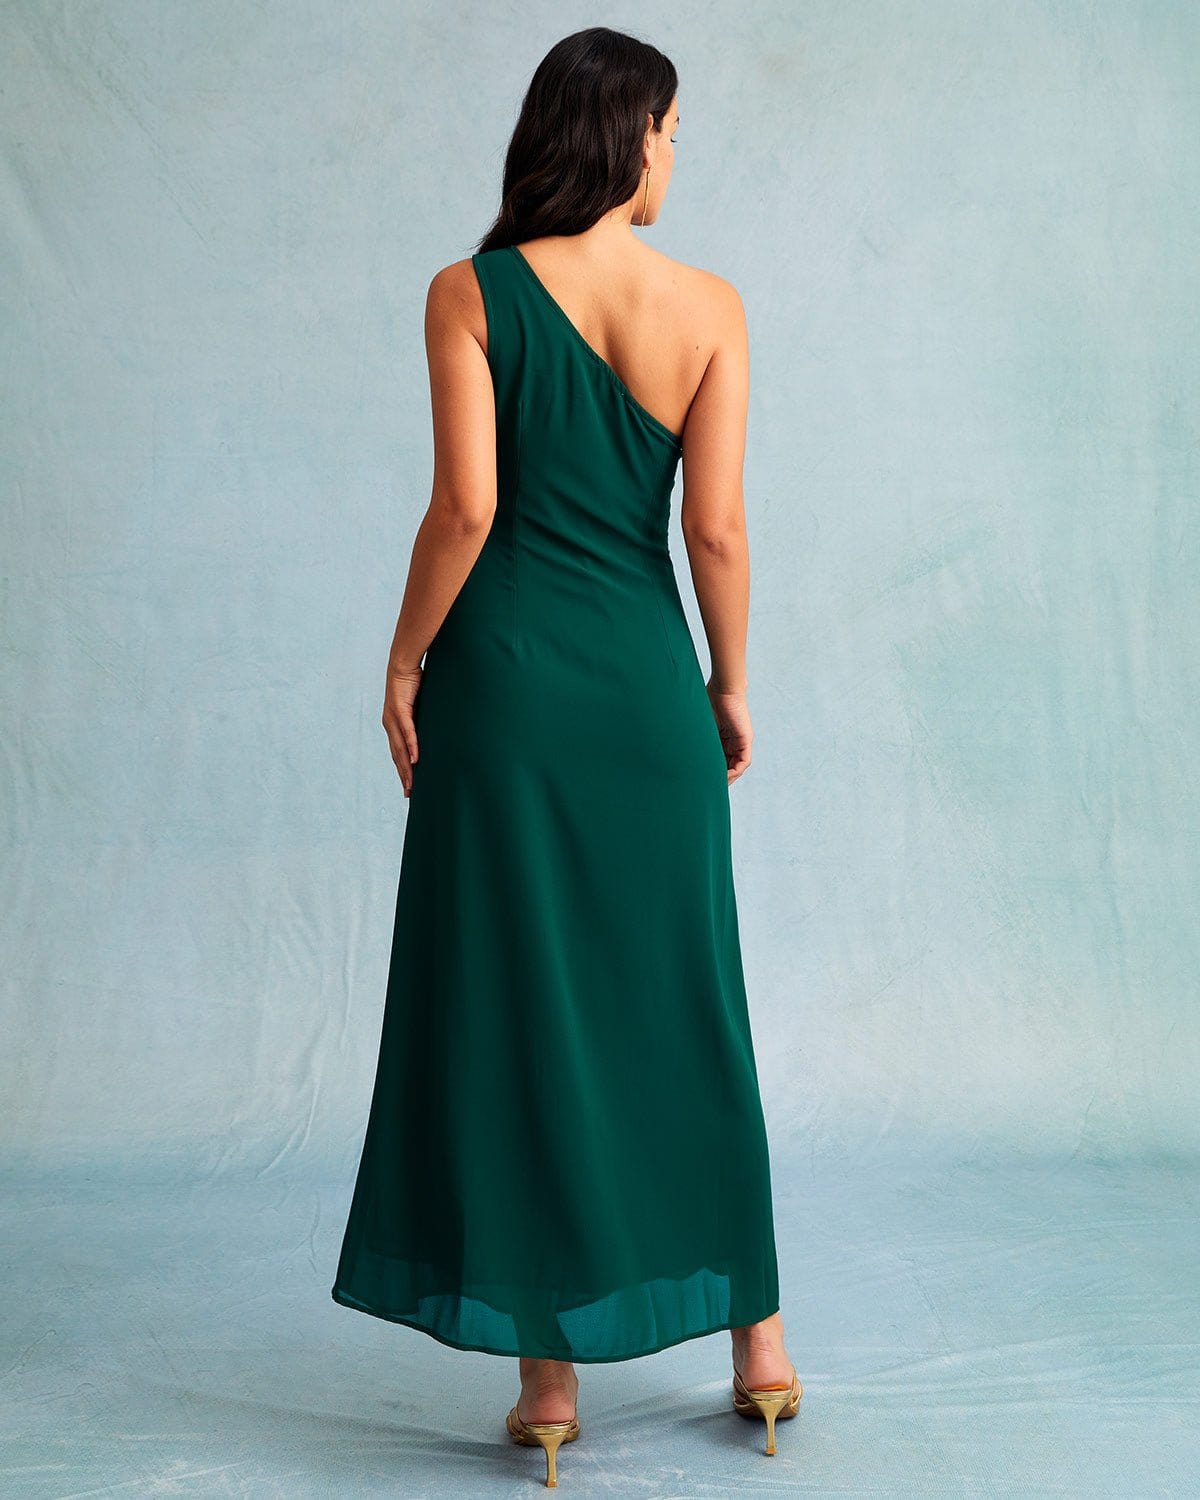 Green One Shoulder Sleeveless Maxi Dress - Women's Casual